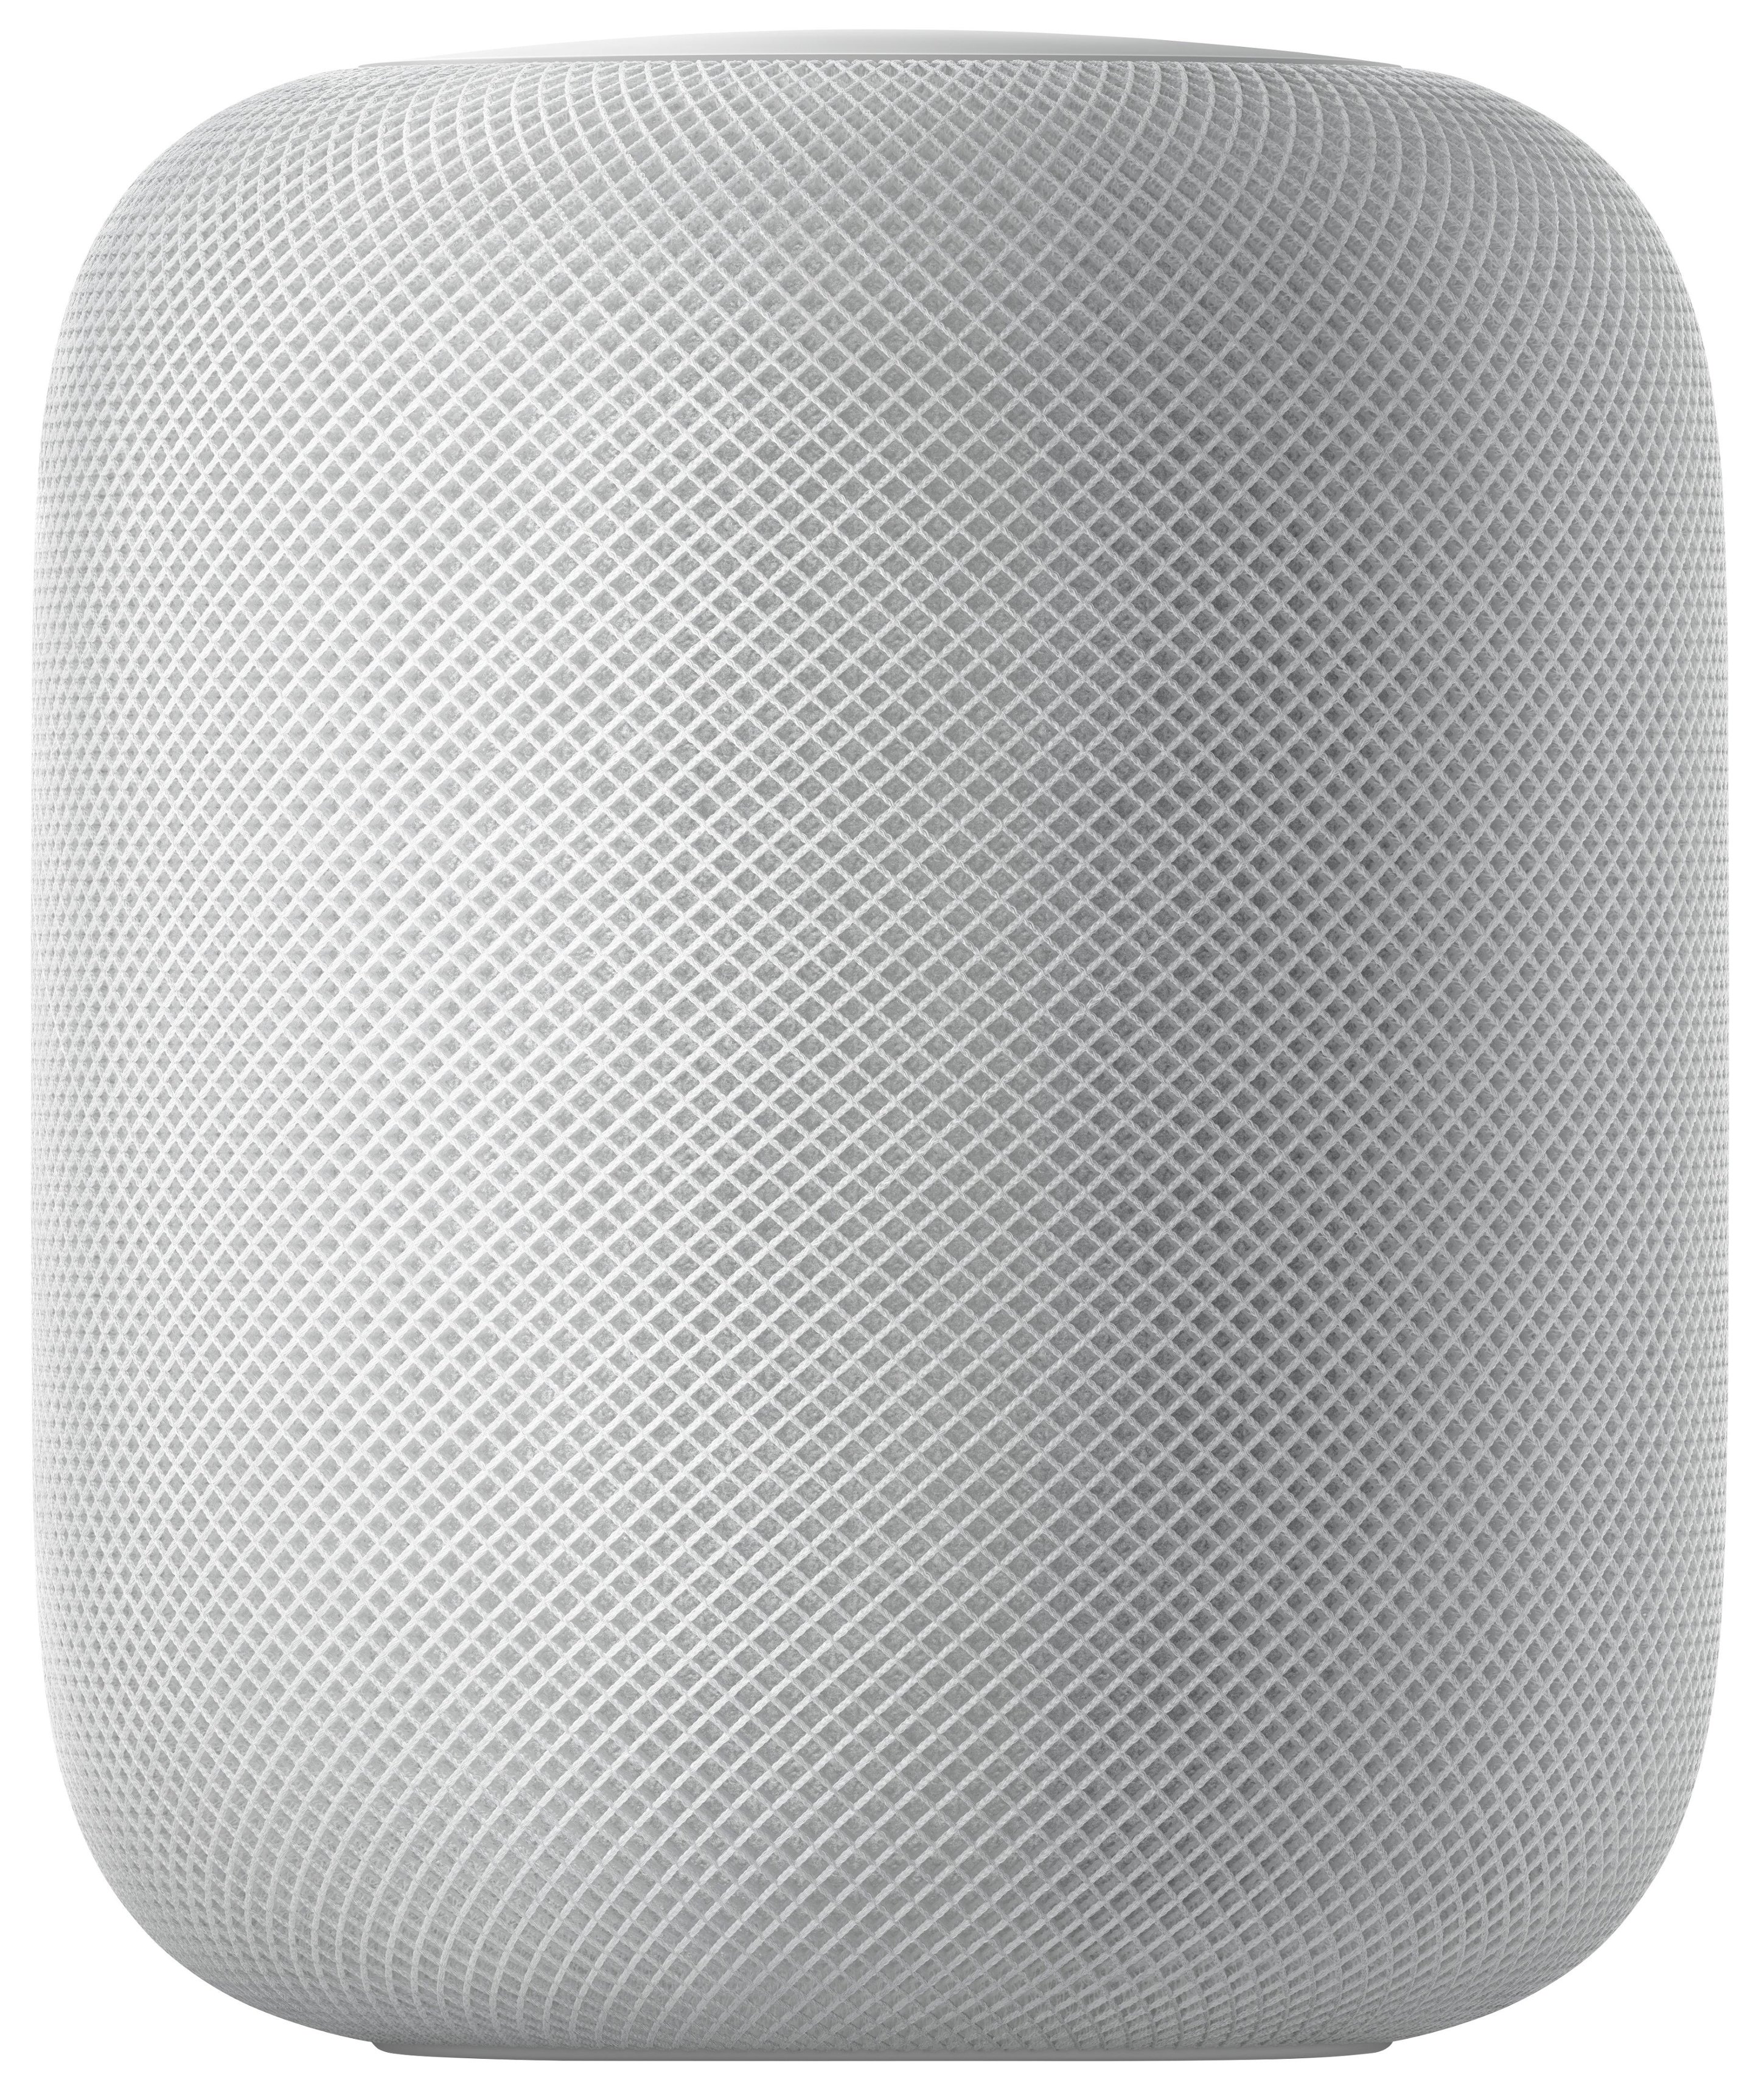 Apple HomePod White MQHV2LL/A - Best Buy